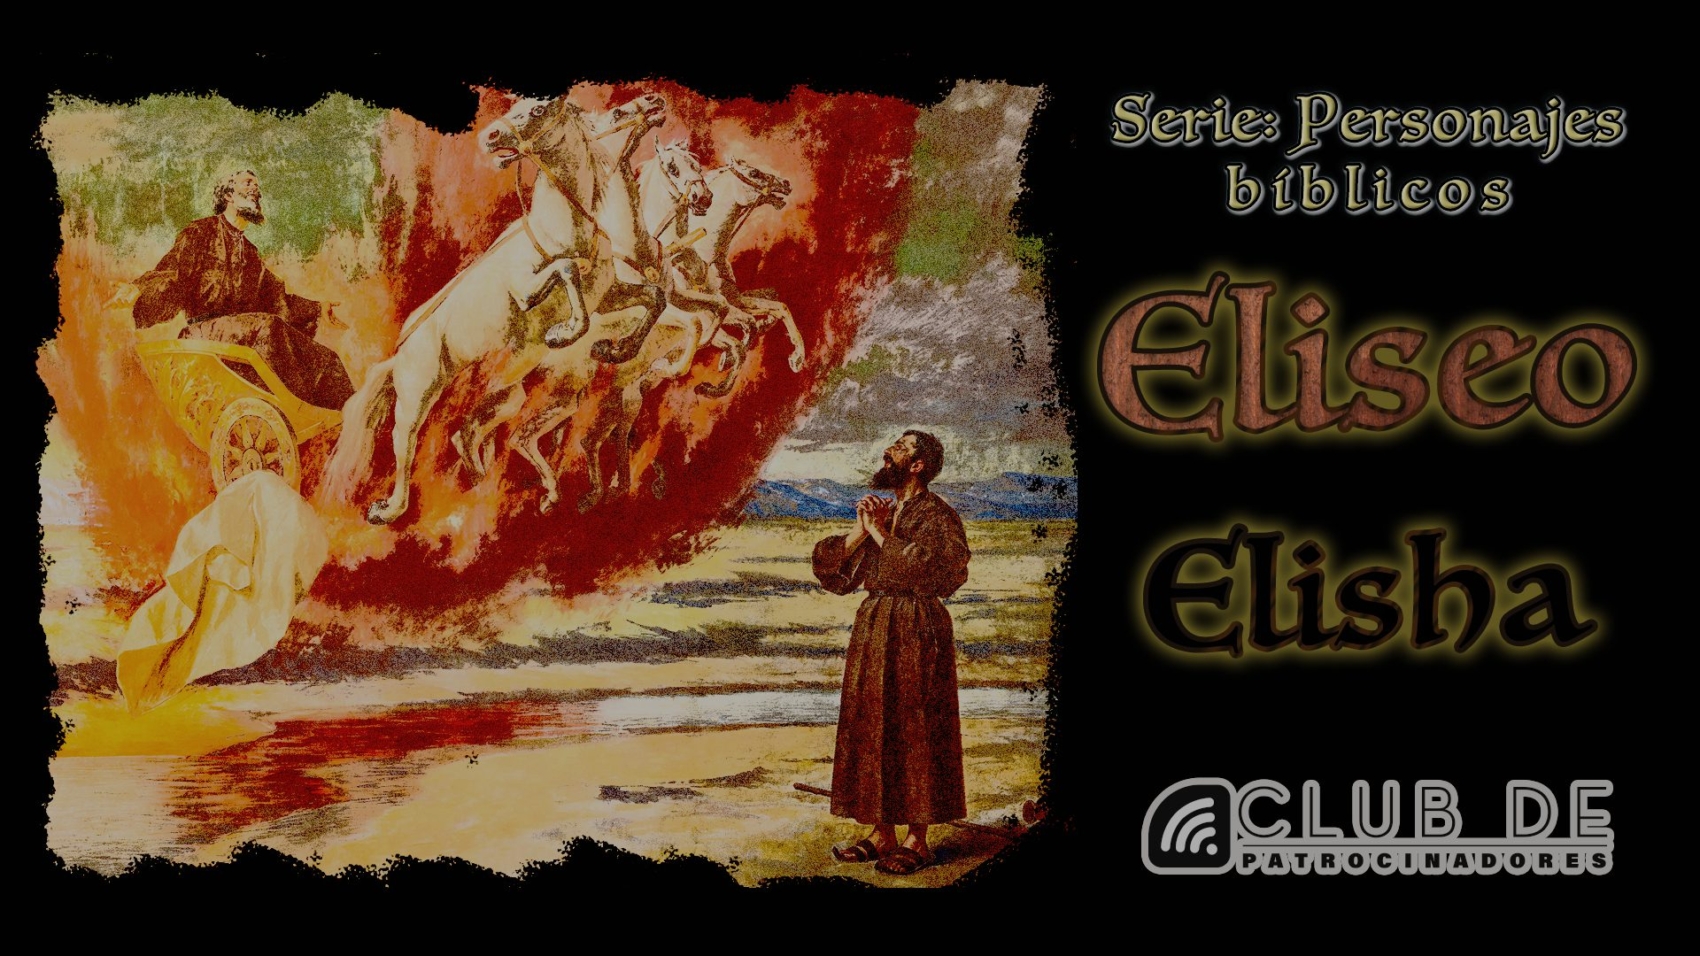 CP_62 -personaje biblico- Eliseo - 1920 x 1080